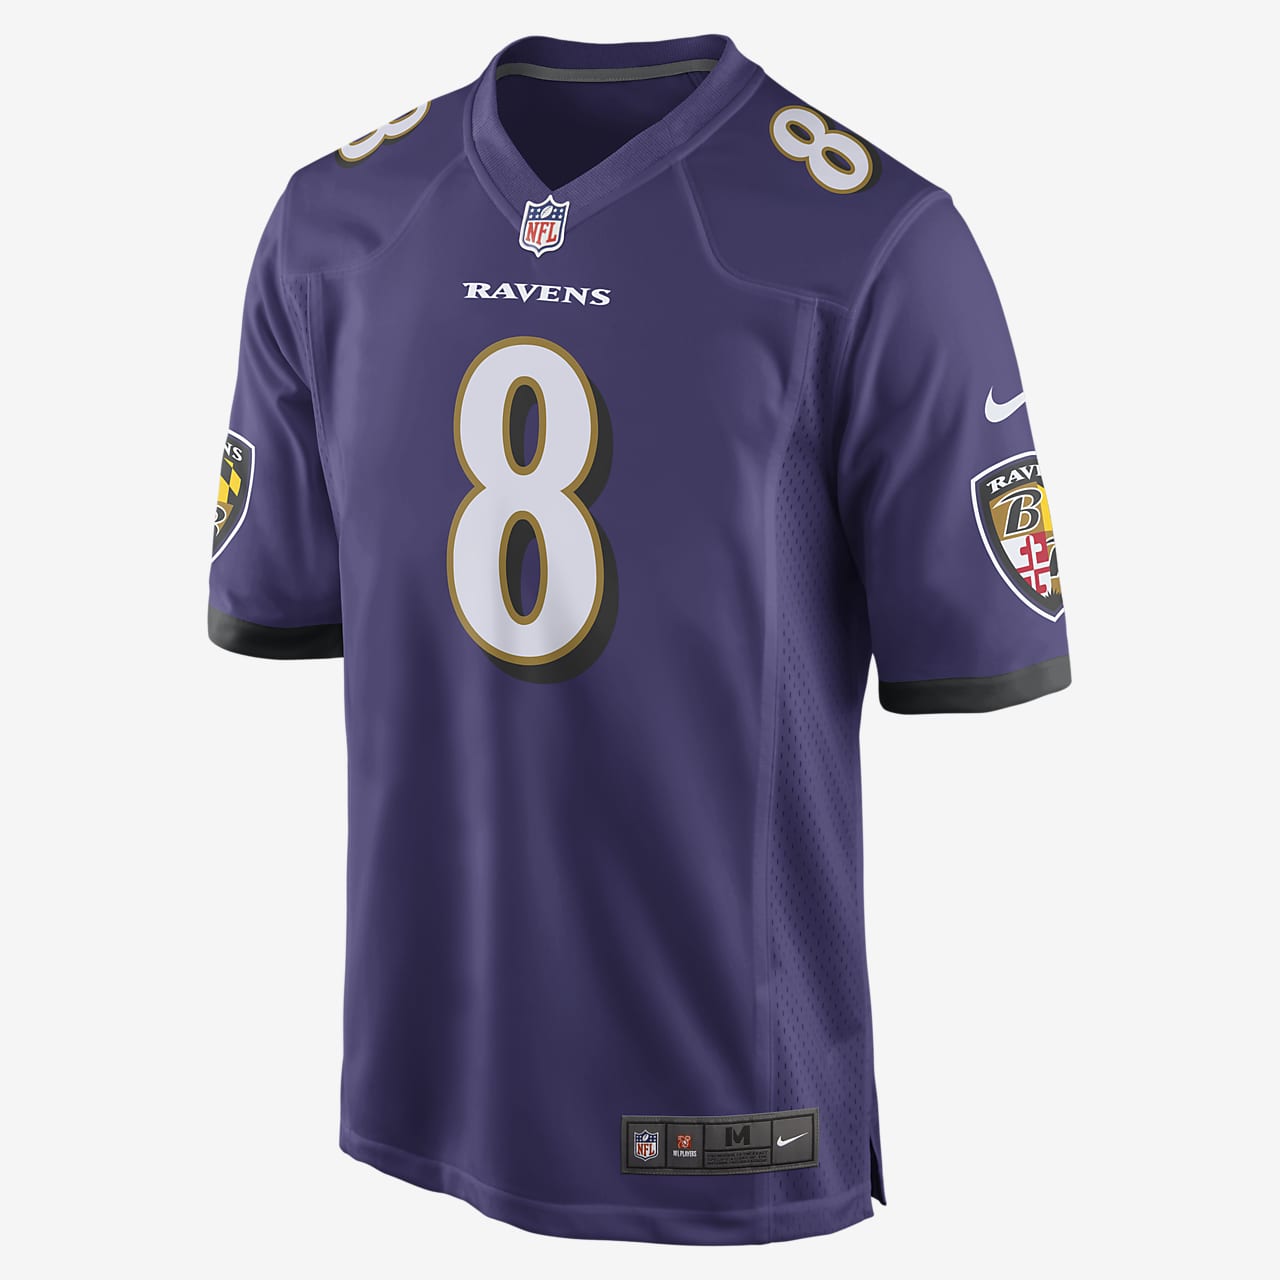 patrouille ontwikkelen verder NFL Baltimore Ravens Game (Lamar Jackson) Men's Football Jersey. Nike.com